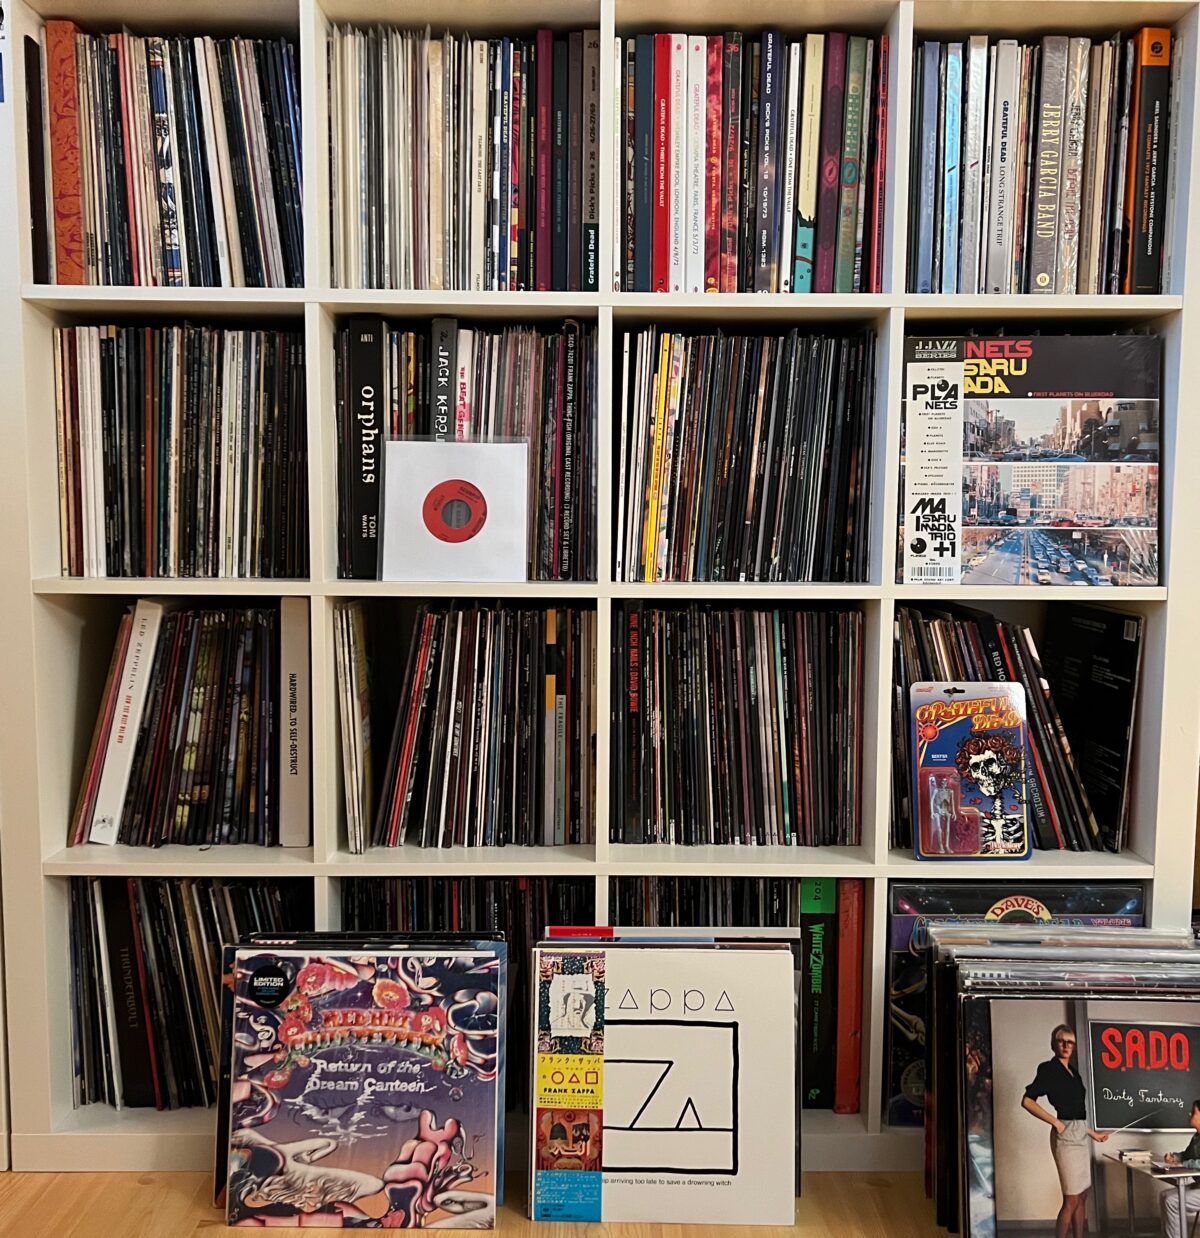 Collecting vinyl records